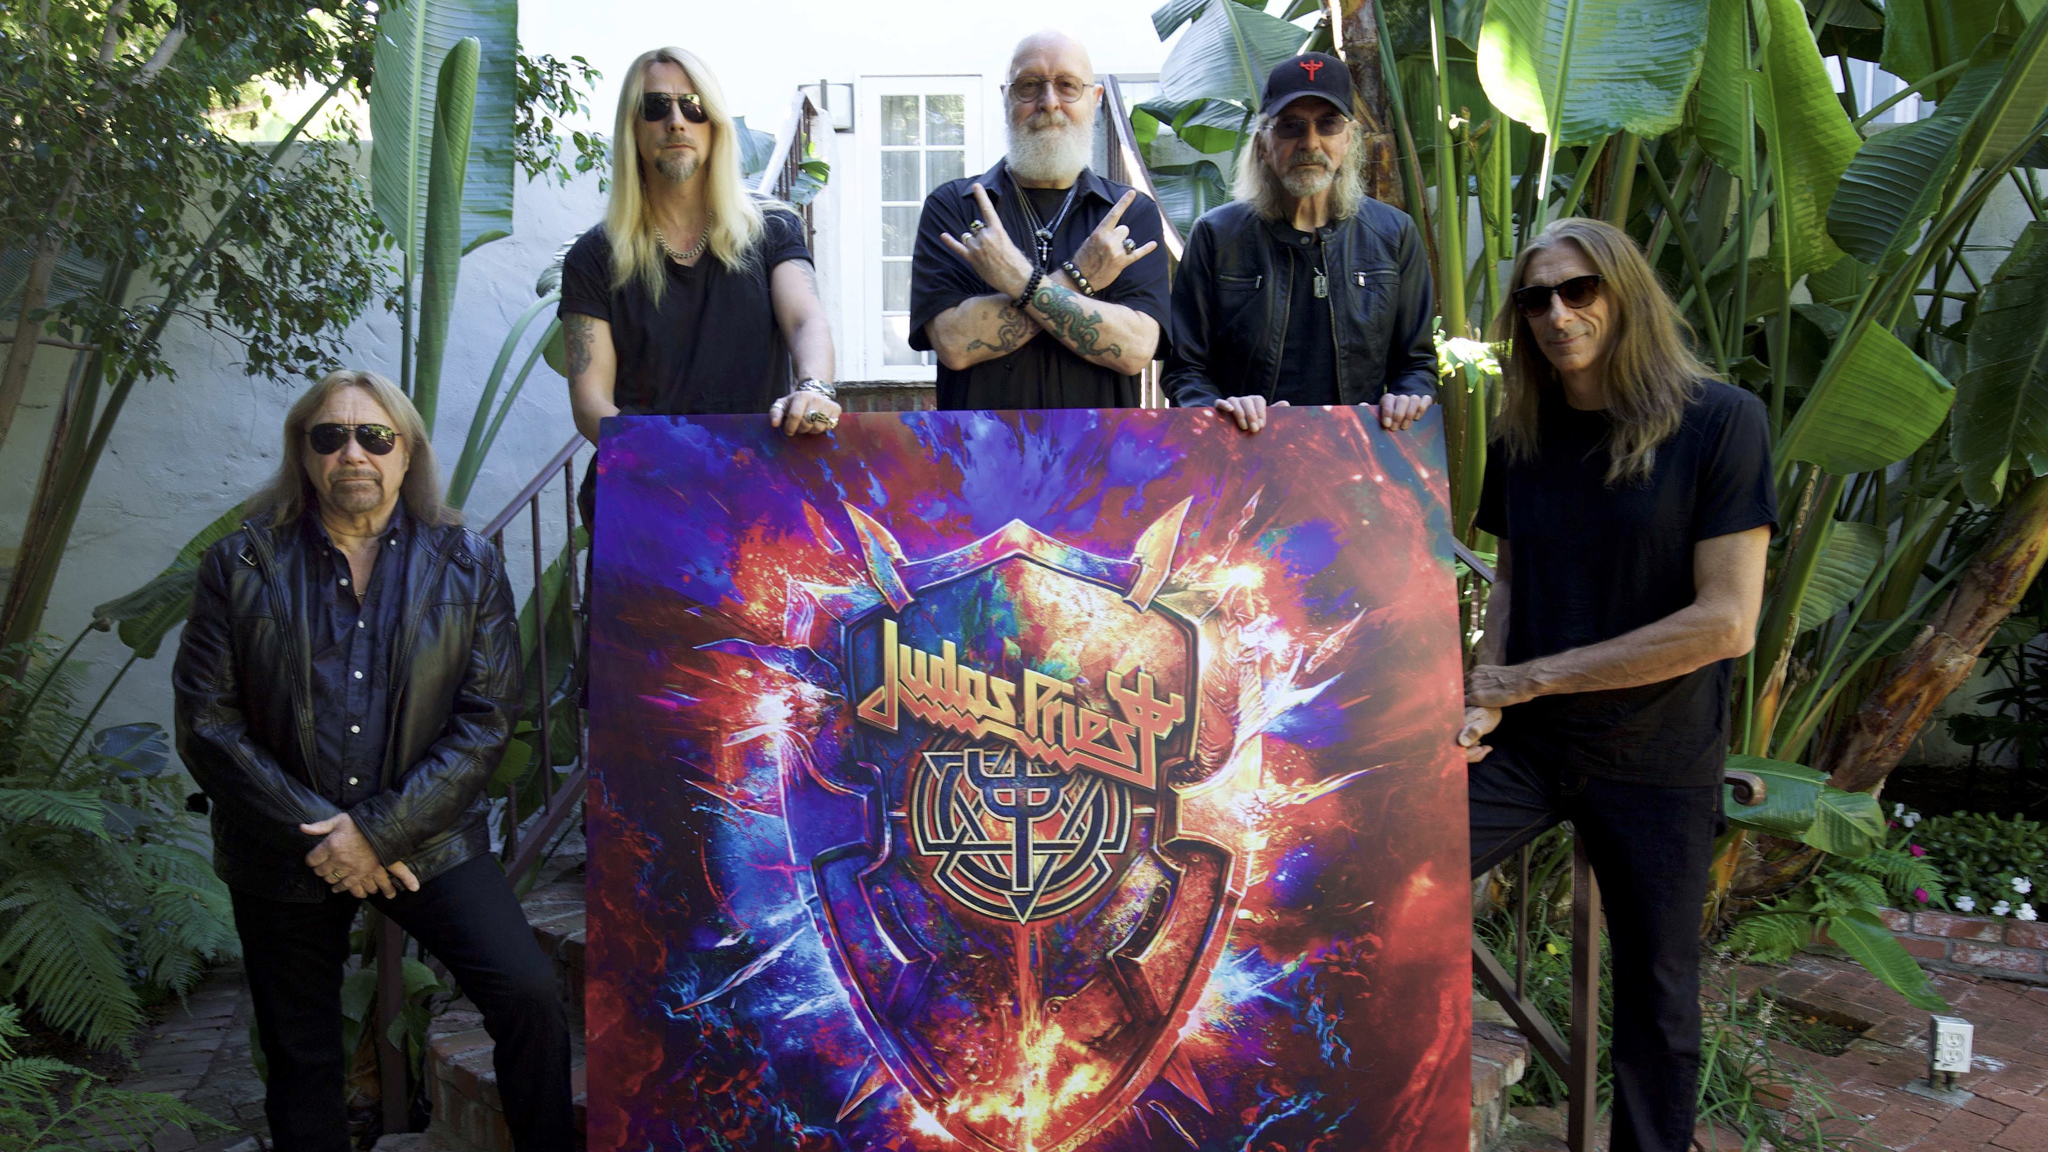 Judas Priest announce NEW album & FIRST SINGLE at Power Trip